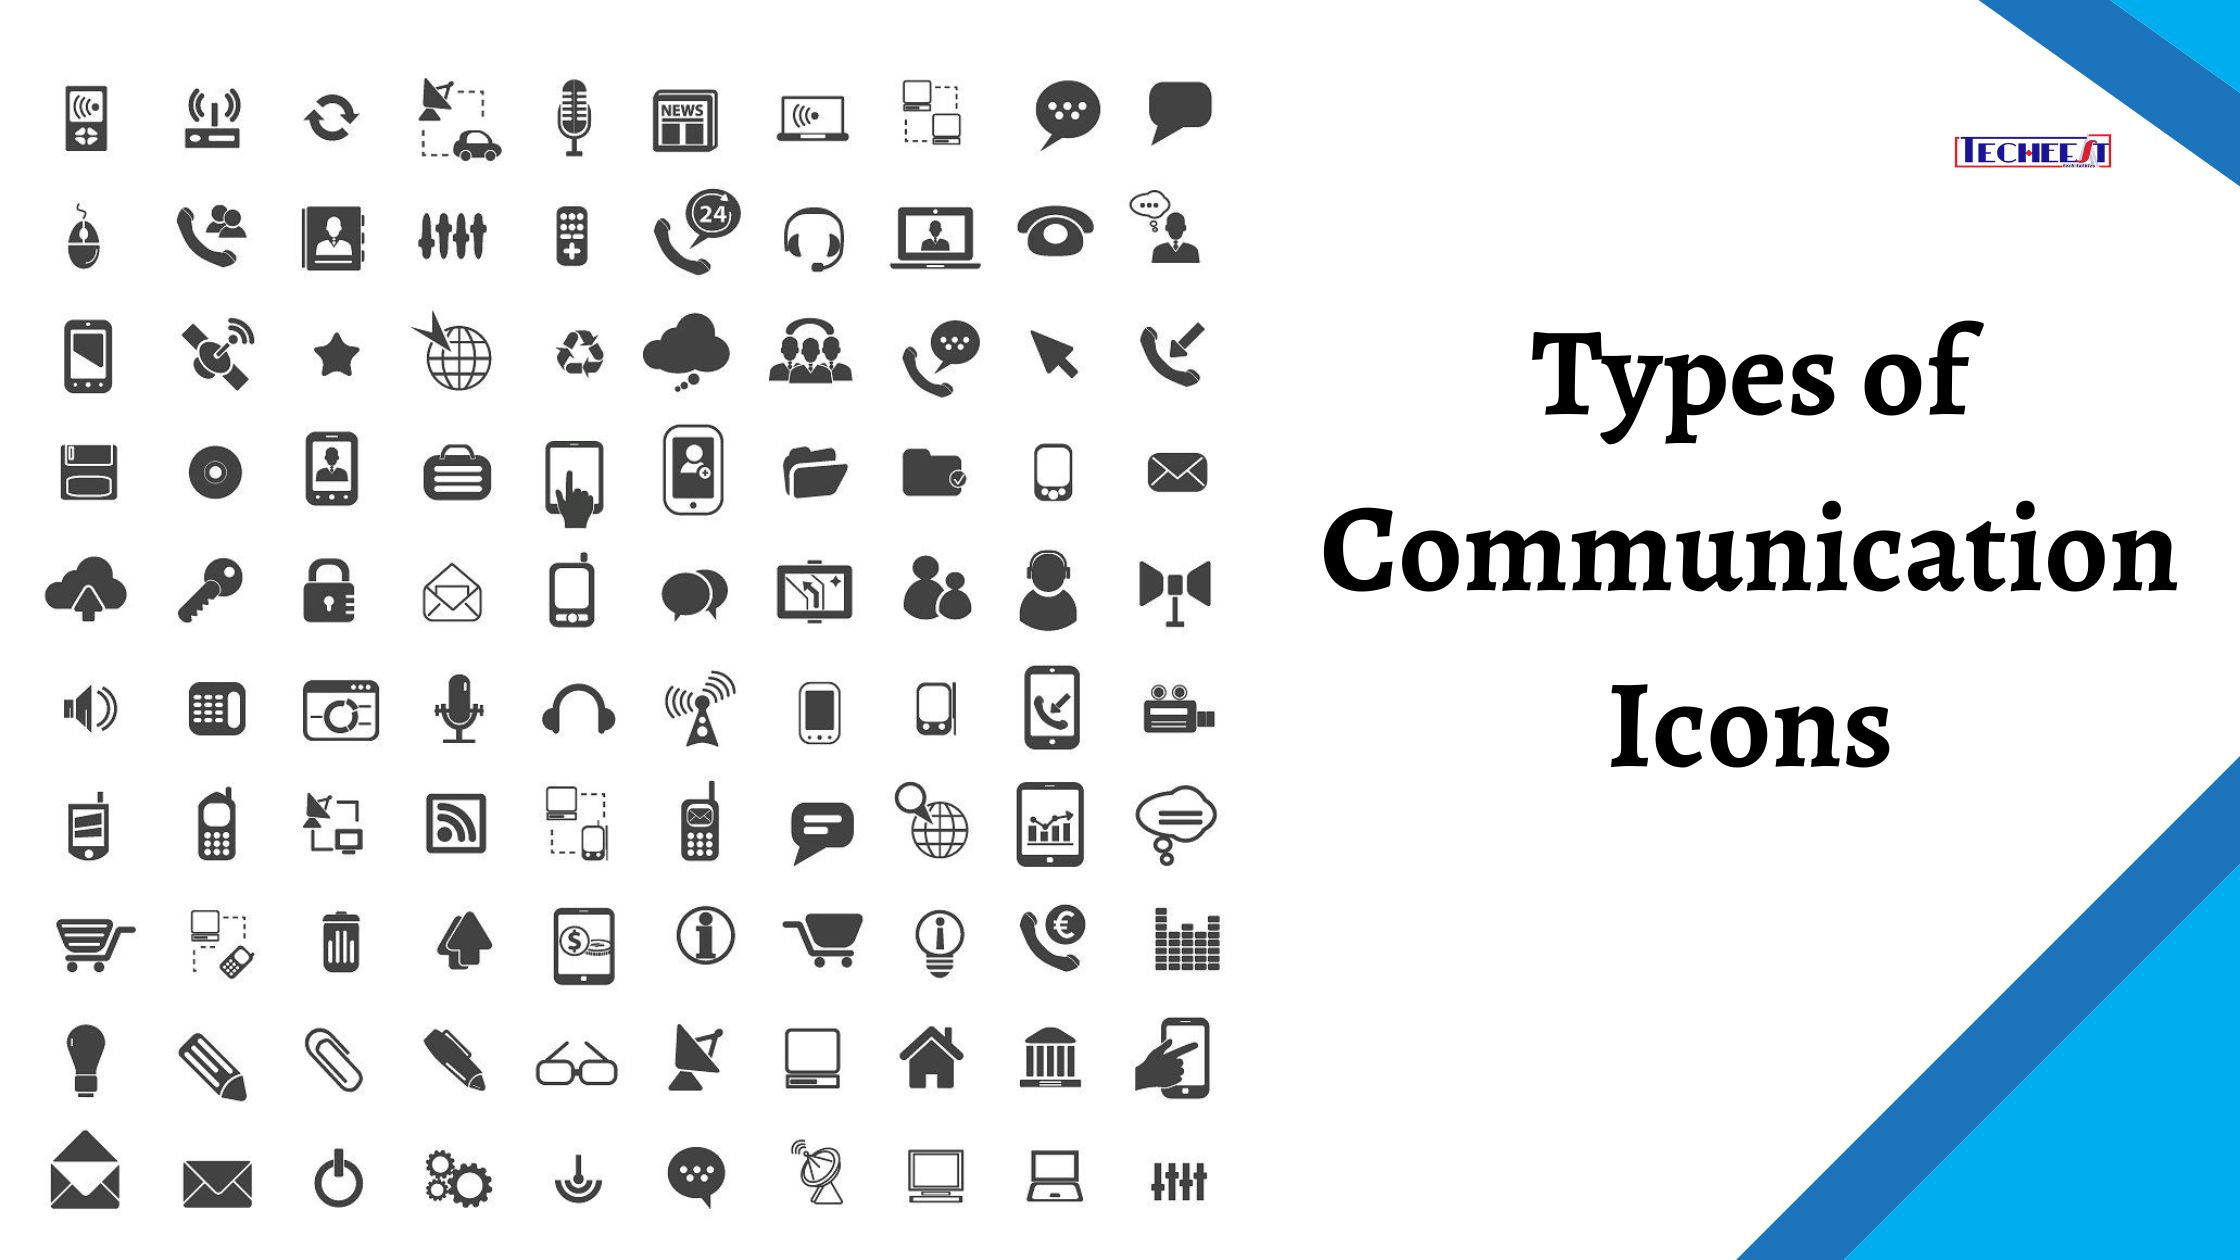 Types of Communication Icons